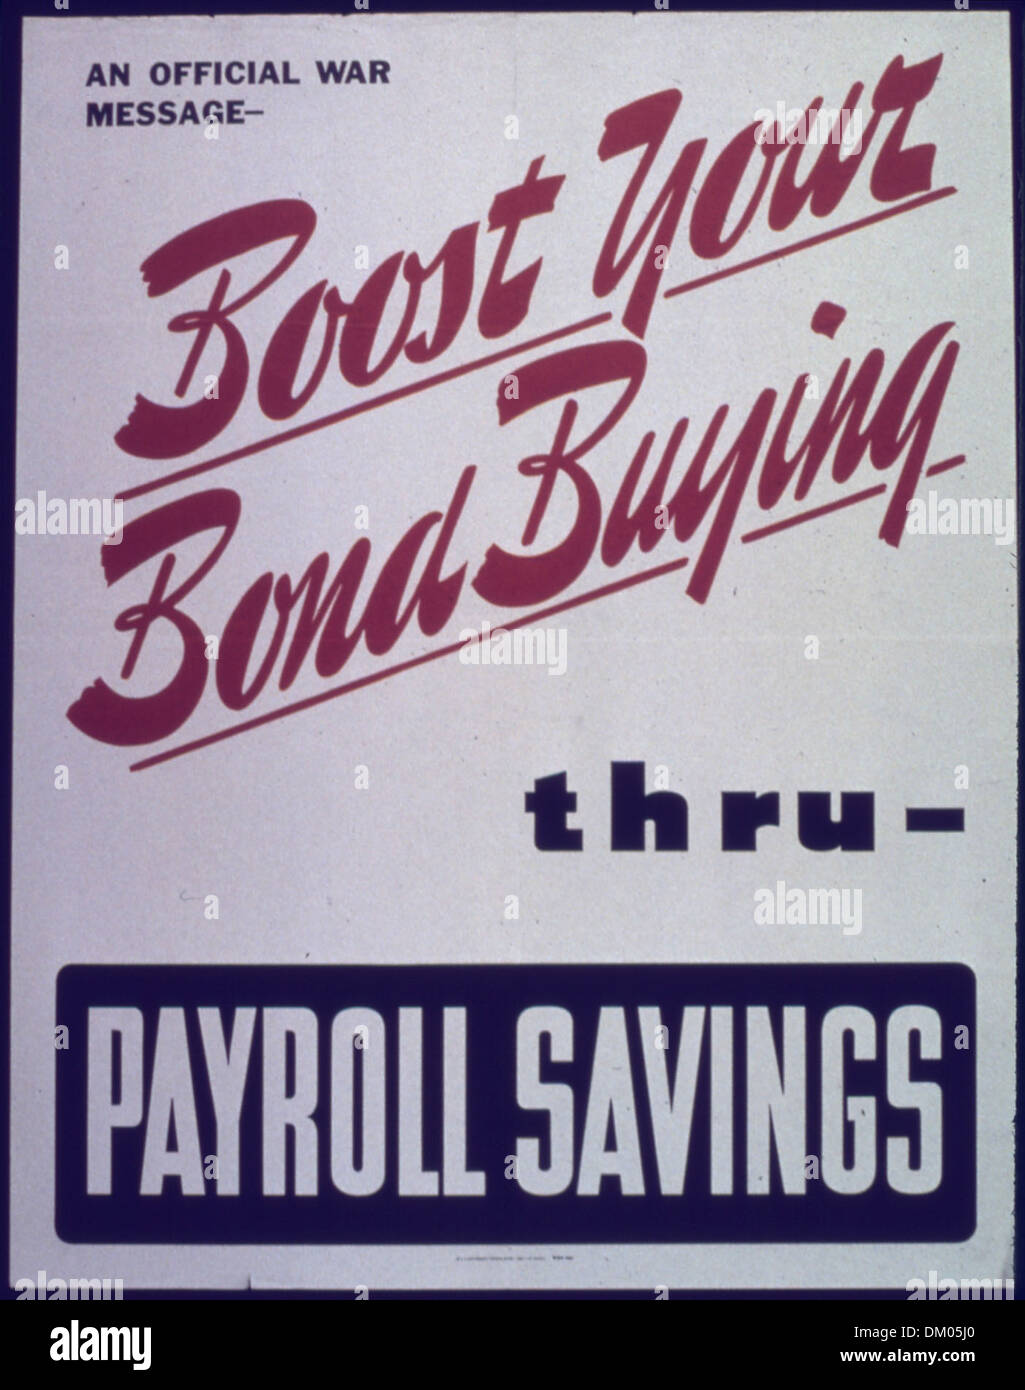 'Boost your bond buying thru payroll savings' 513978 Stock Photo